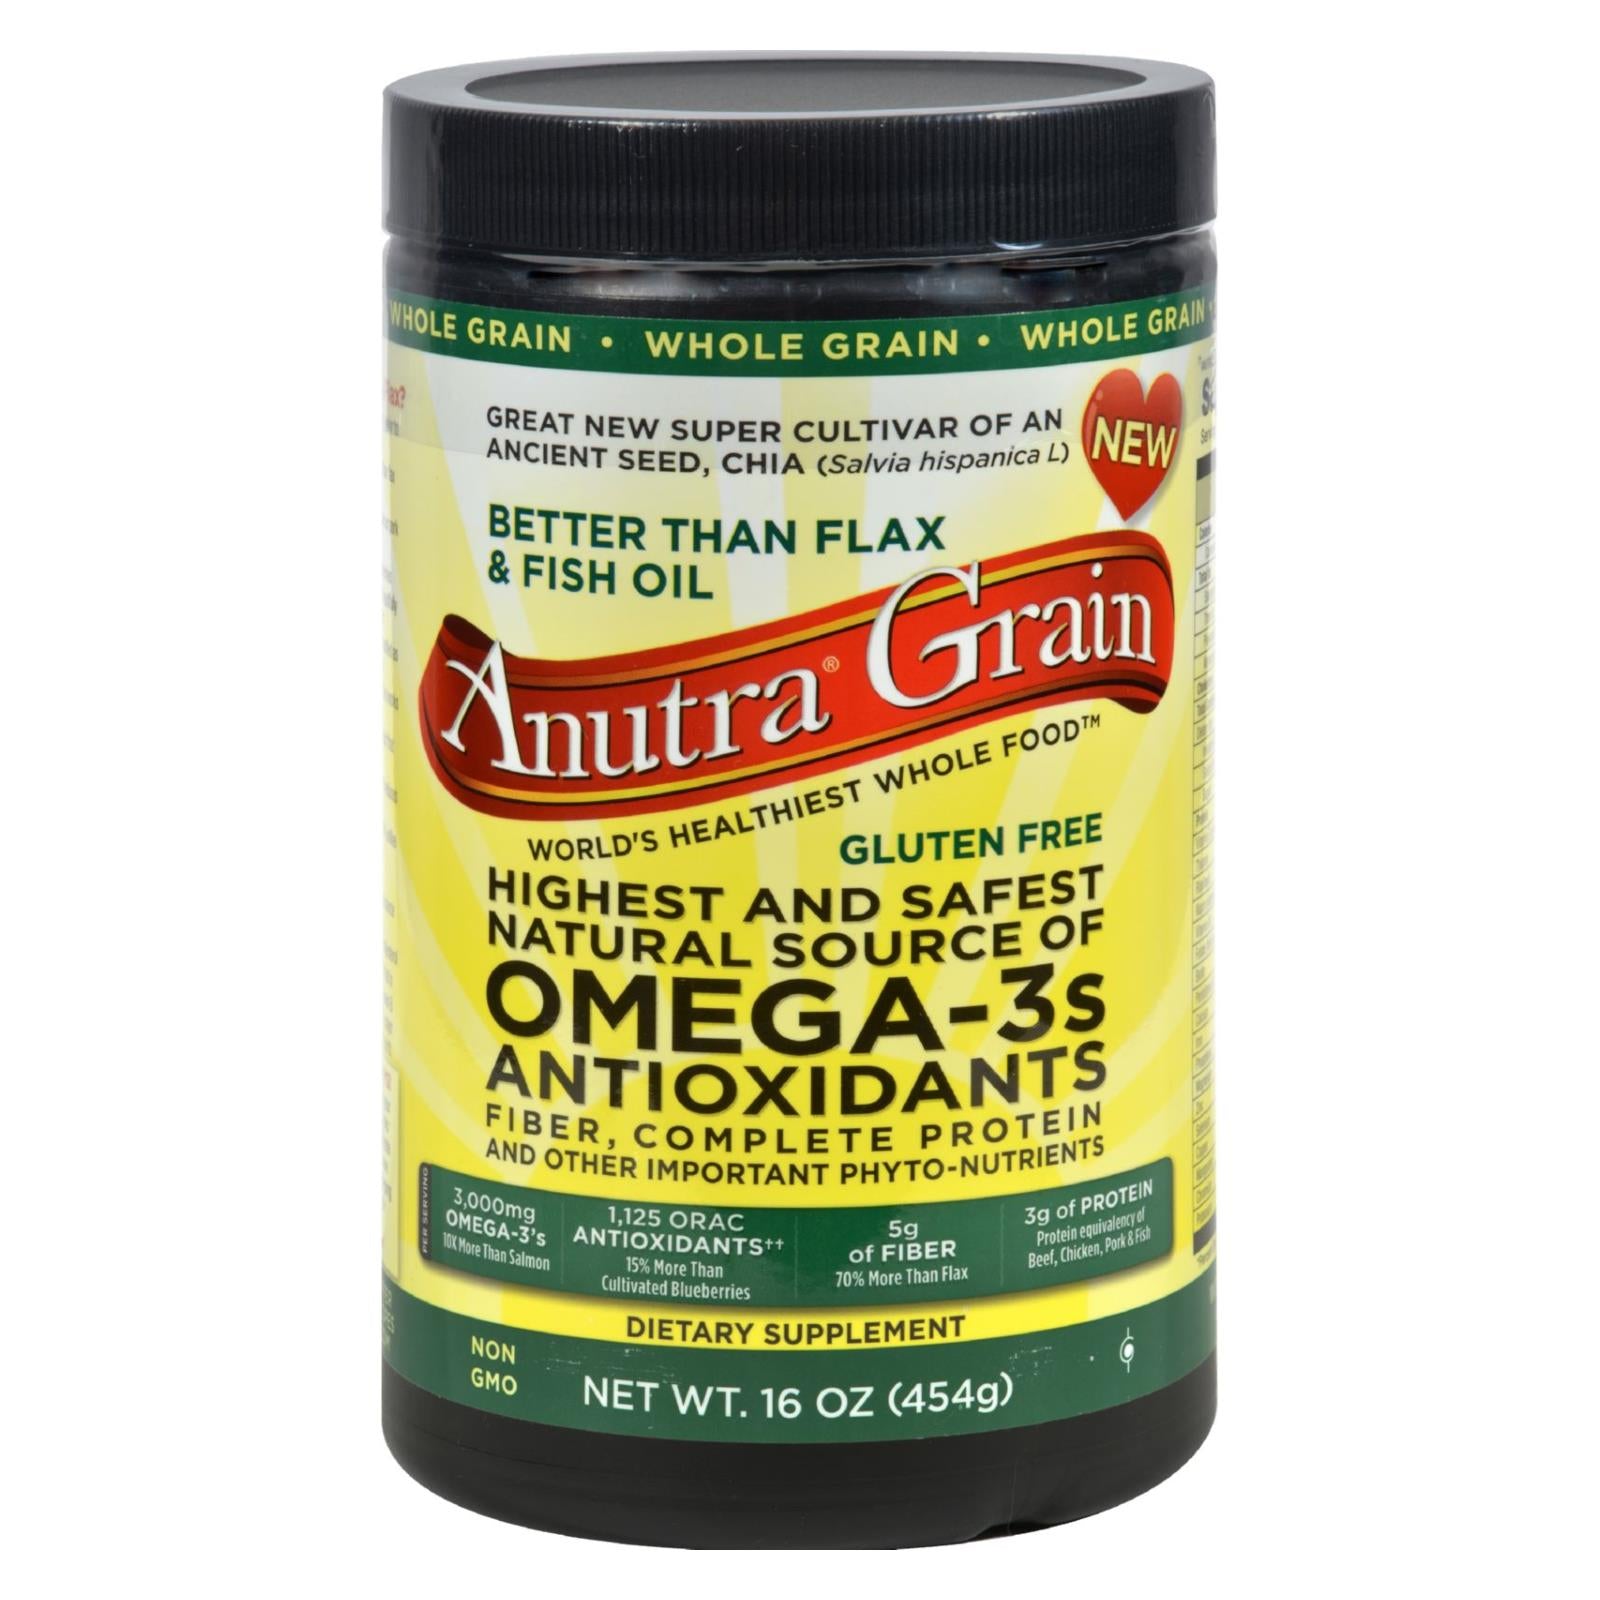 Anutra, Anutra Omega 3 Antioxidants Fiber and Complete Protein Whole Grain - 16 oz